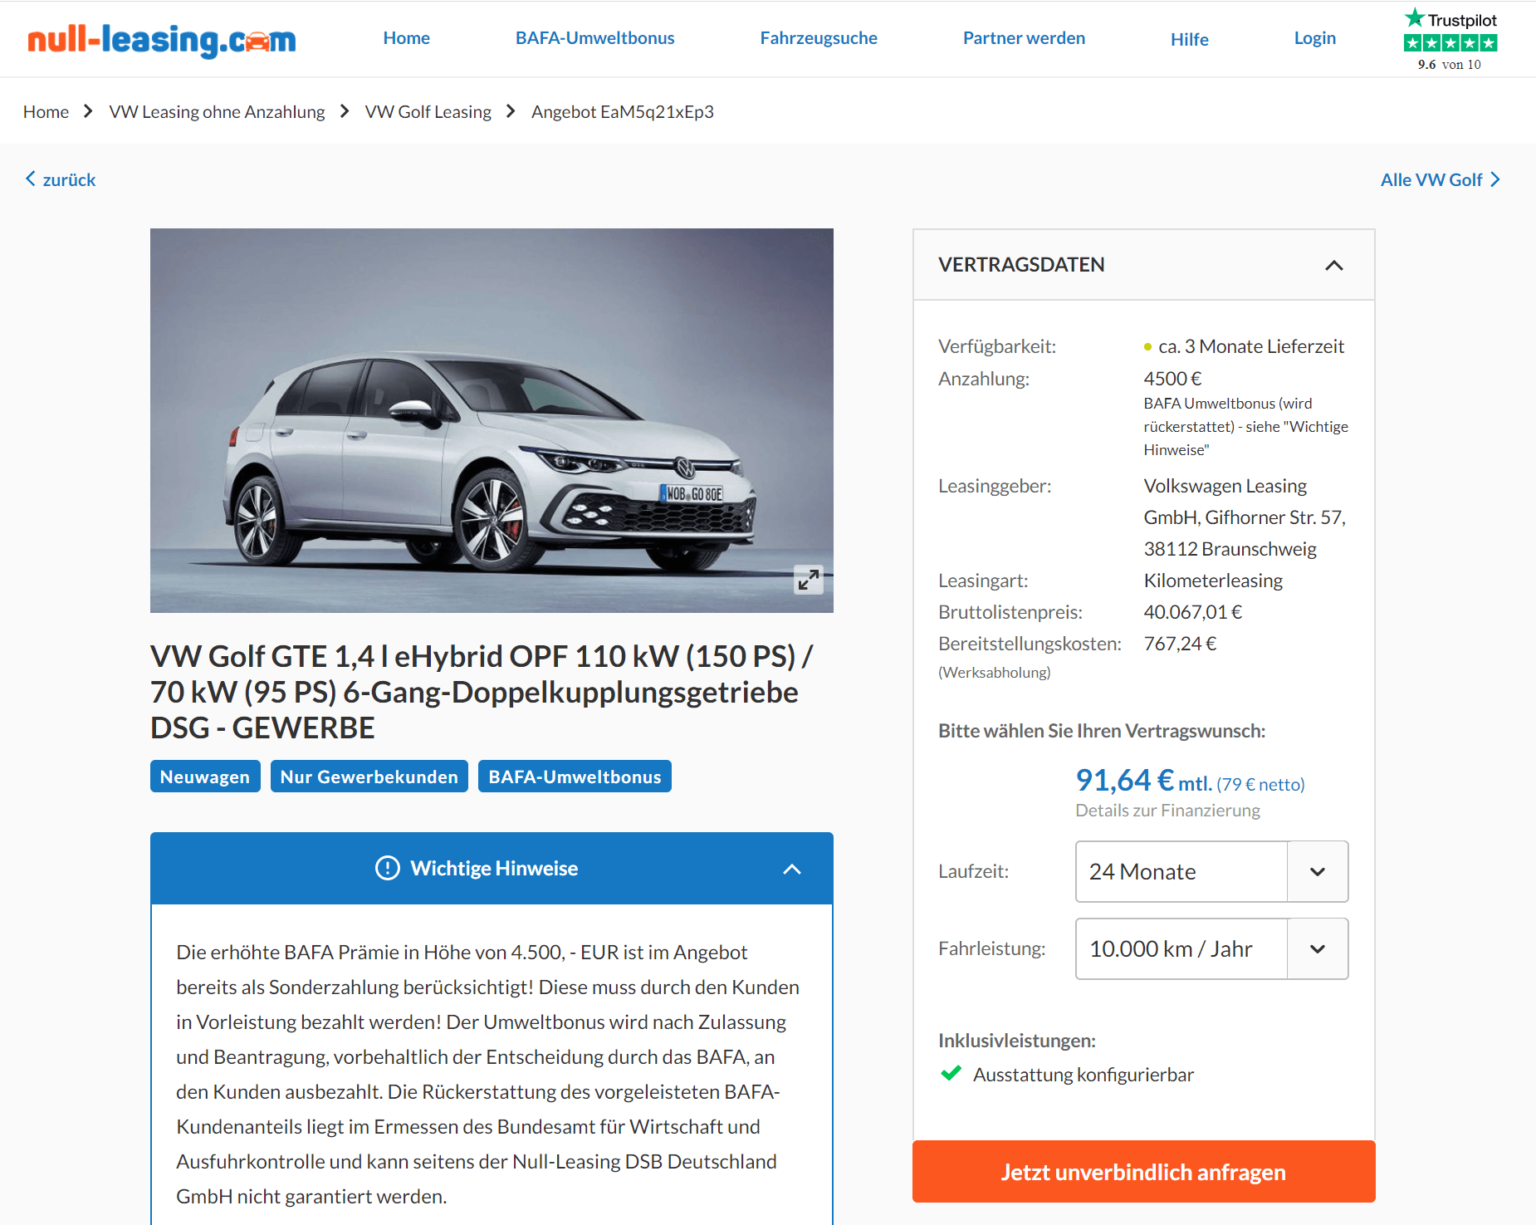 VW Golf 8 GTE 1.4 eHybrid Leasing für 79 Euro netto